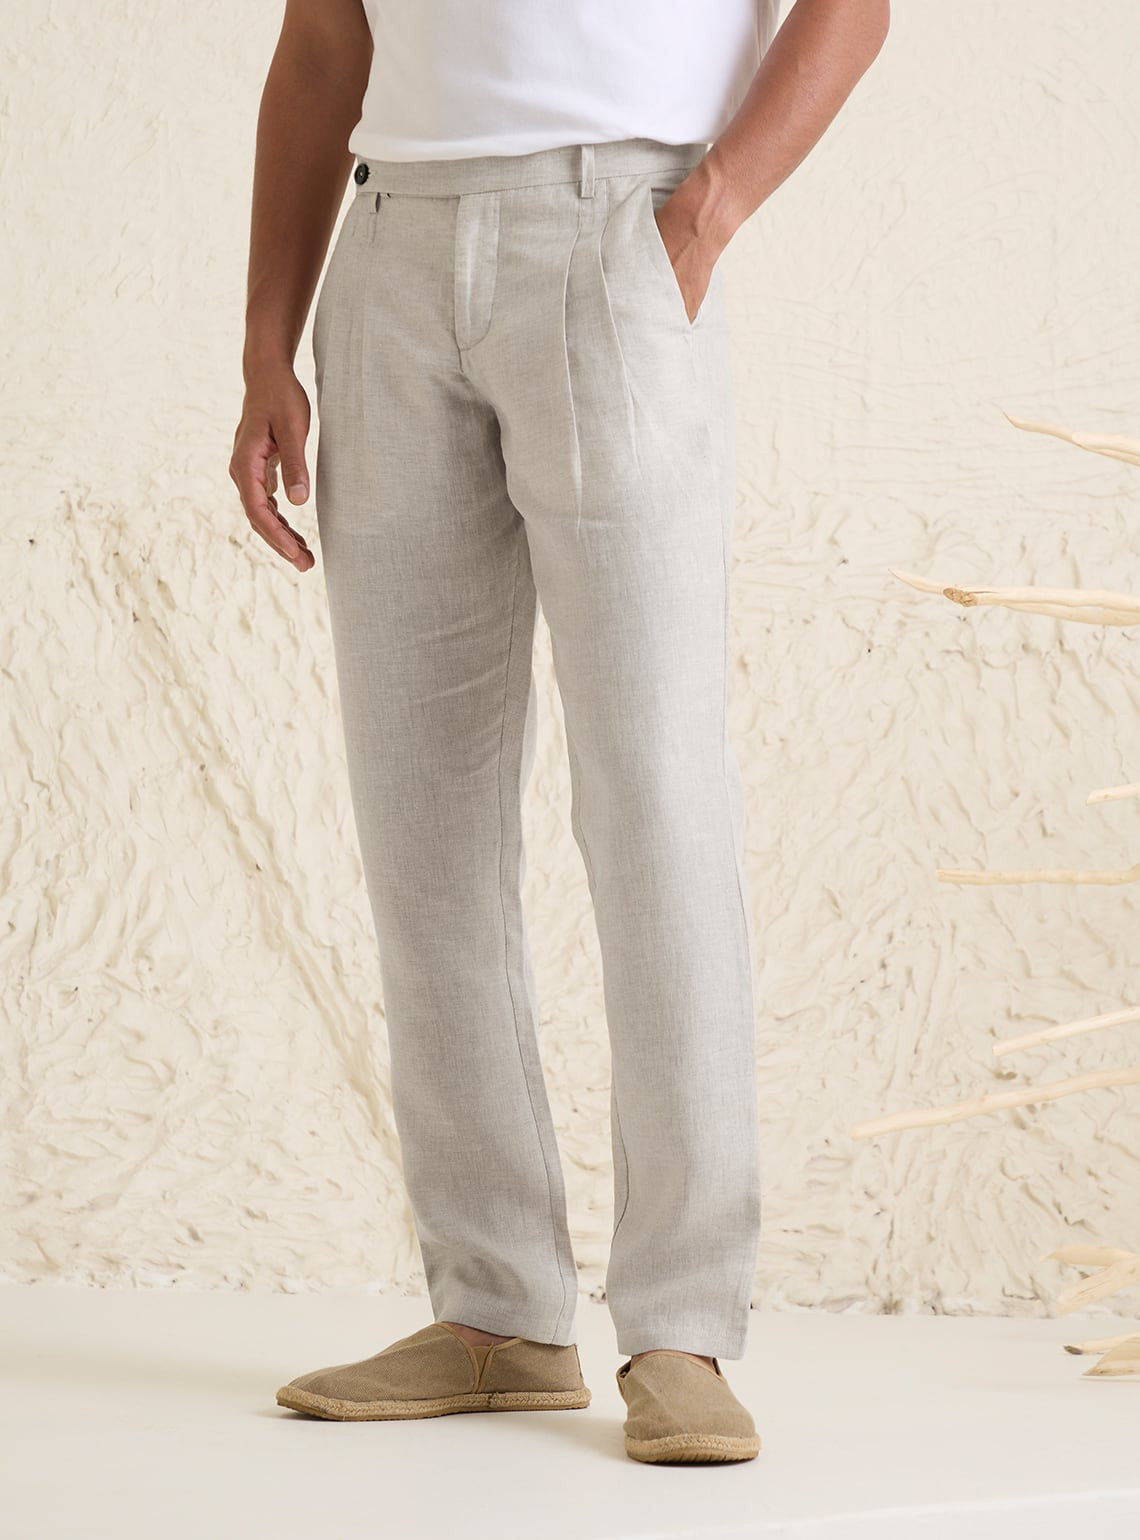 Buy Sandy Beige Linen Pants  Casual Beige Chambrays Pants for Men